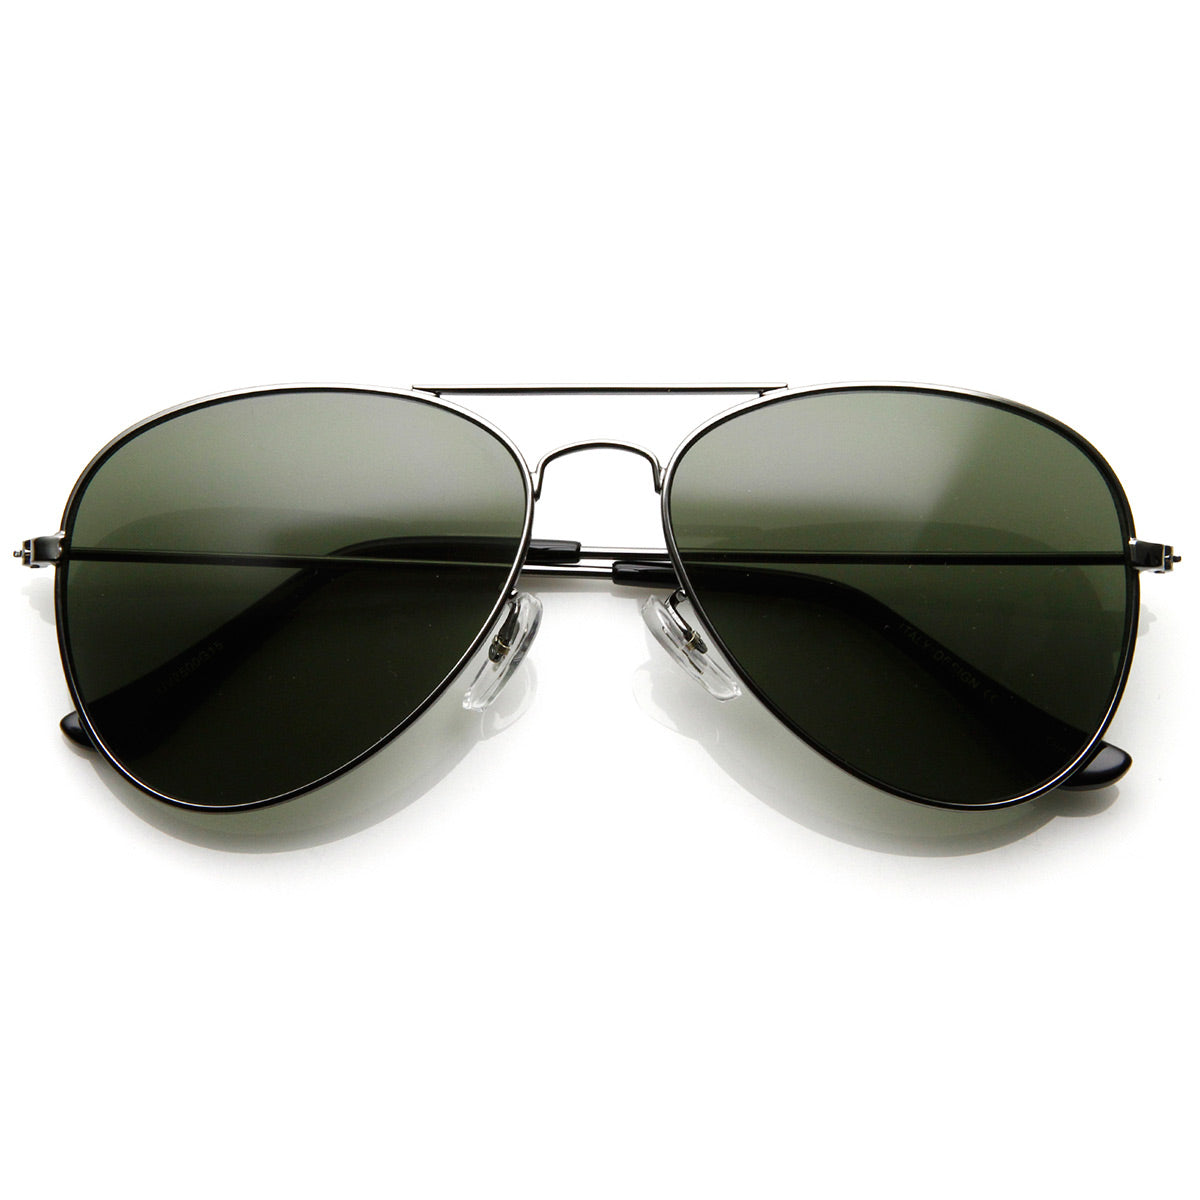 Original Classic Metal Standard Aviator Sunglasses - Nickel Plated Fra